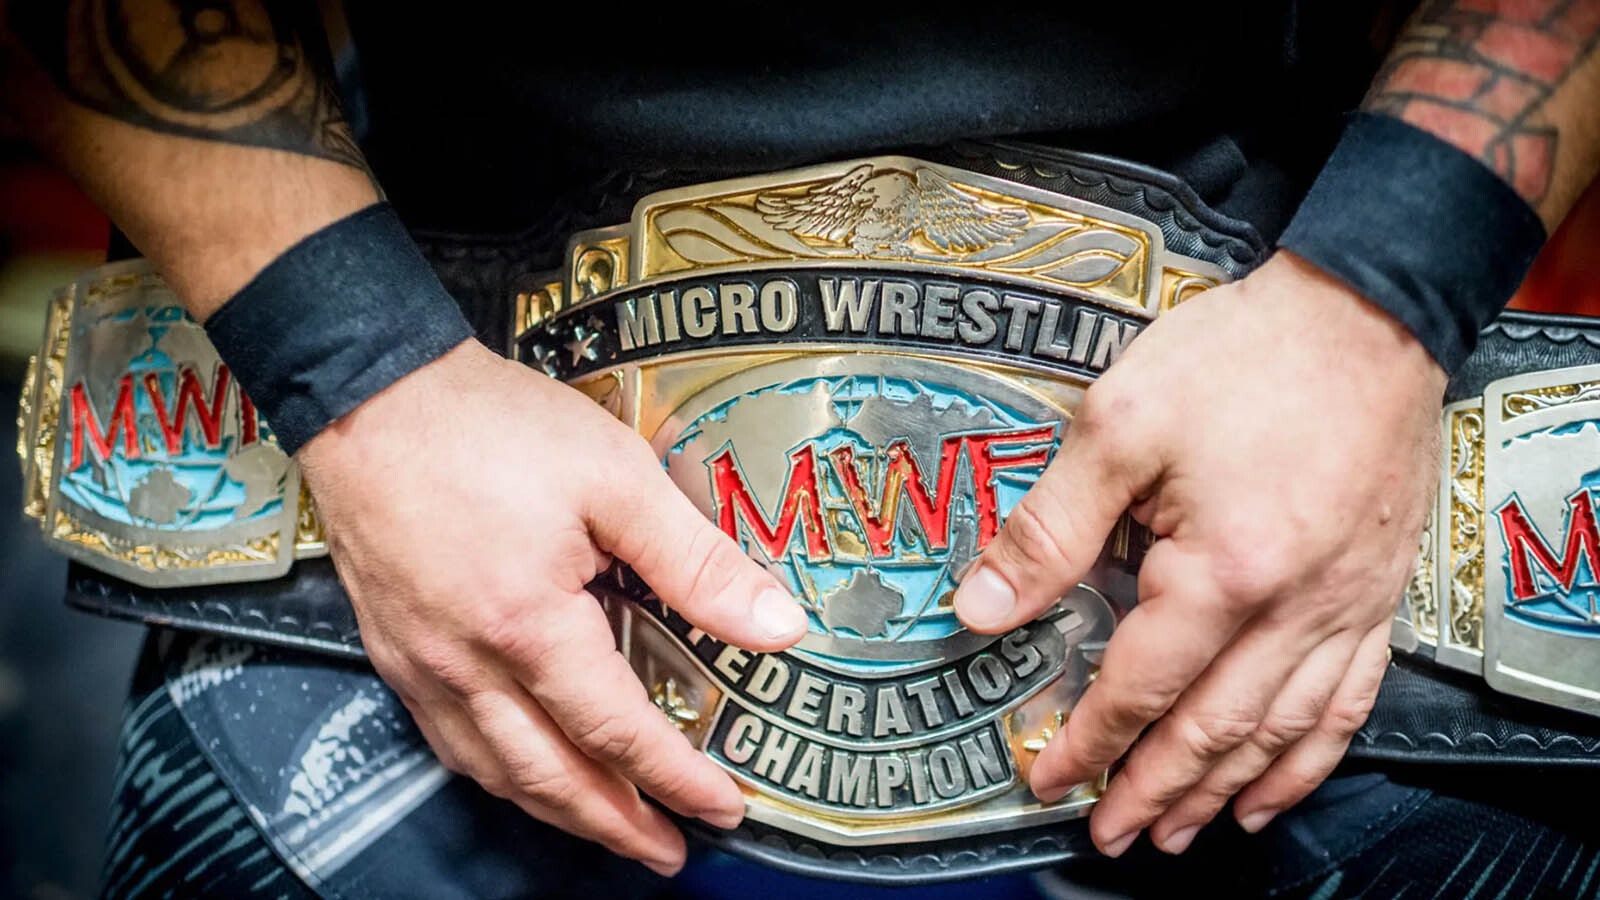 The Micro Wrestling Federation championship belt.